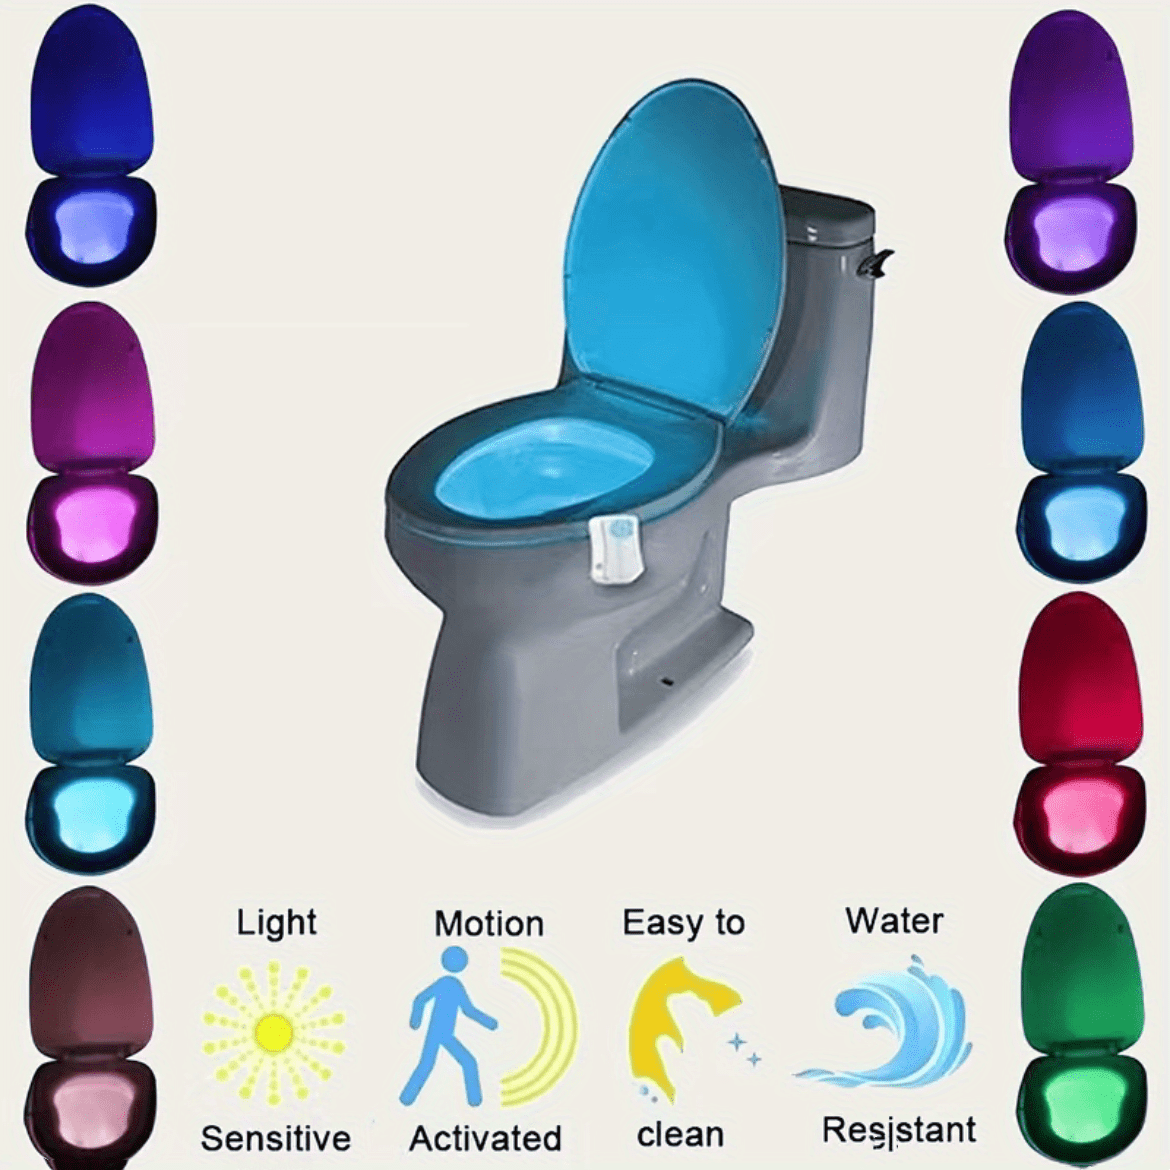 Led Toilet Bowl Light, Motion Sensor Activated Color Changing